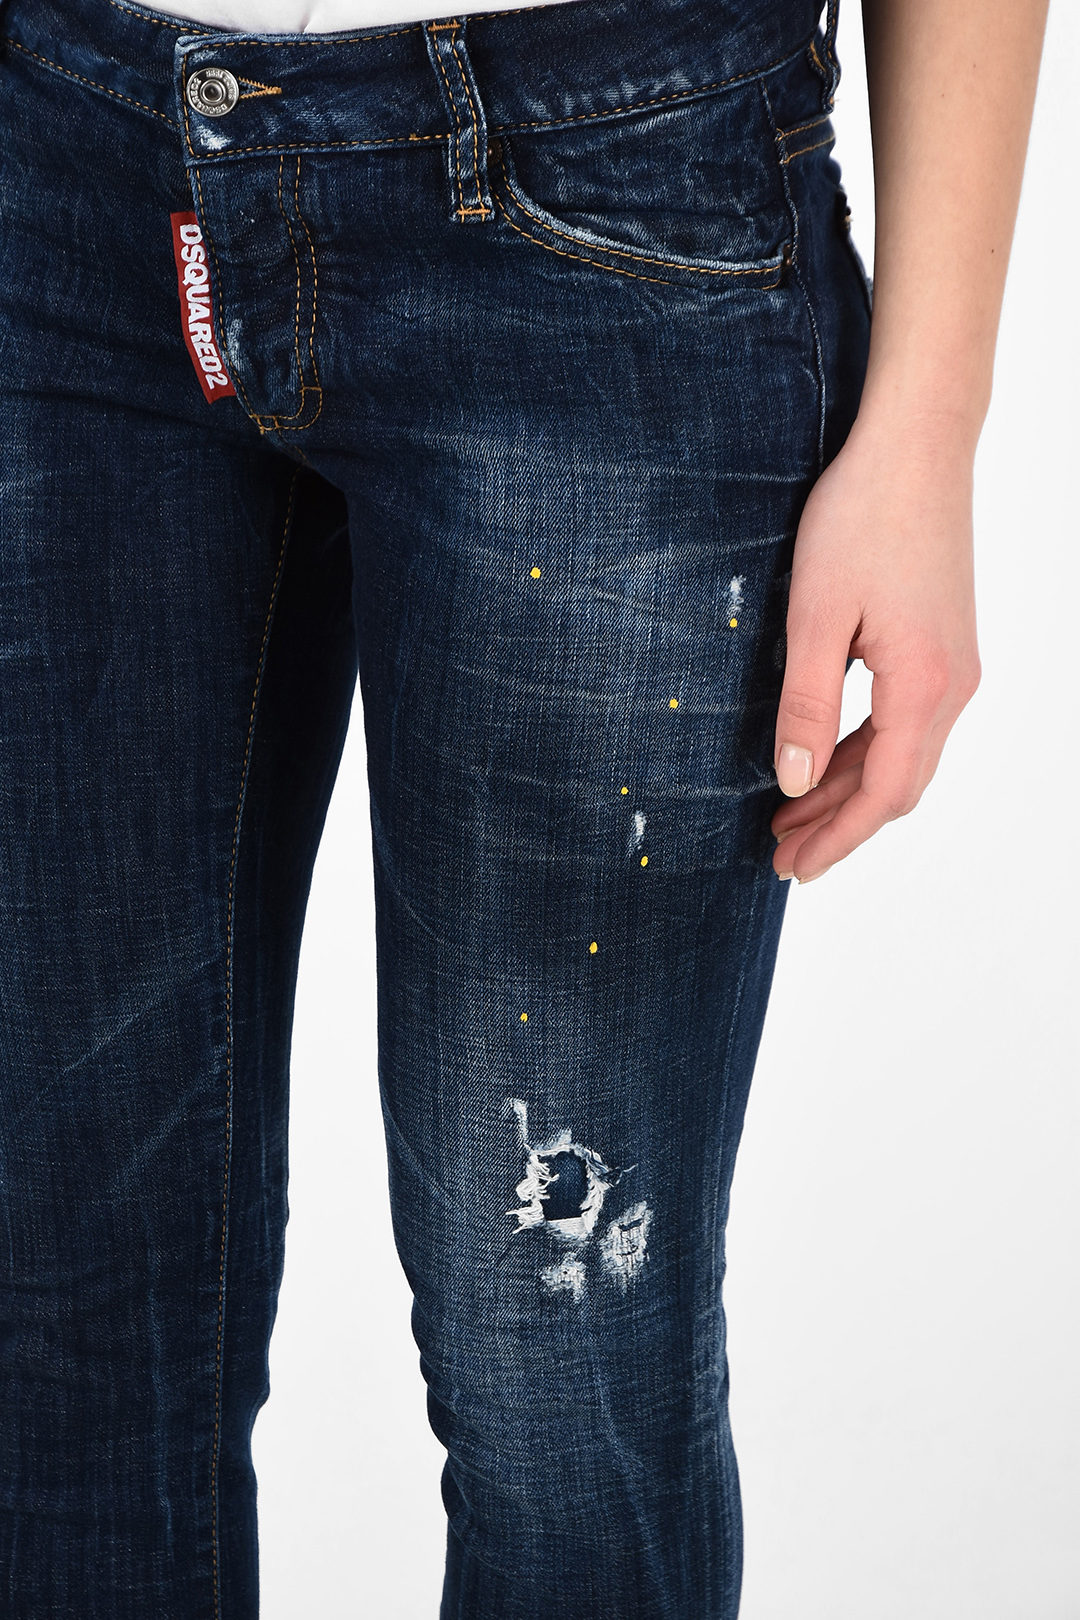 feedback Rouwen De andere dag Dsquared2 Cropped JENNIFER Slim Fit Jeans women - Glamood Outlet